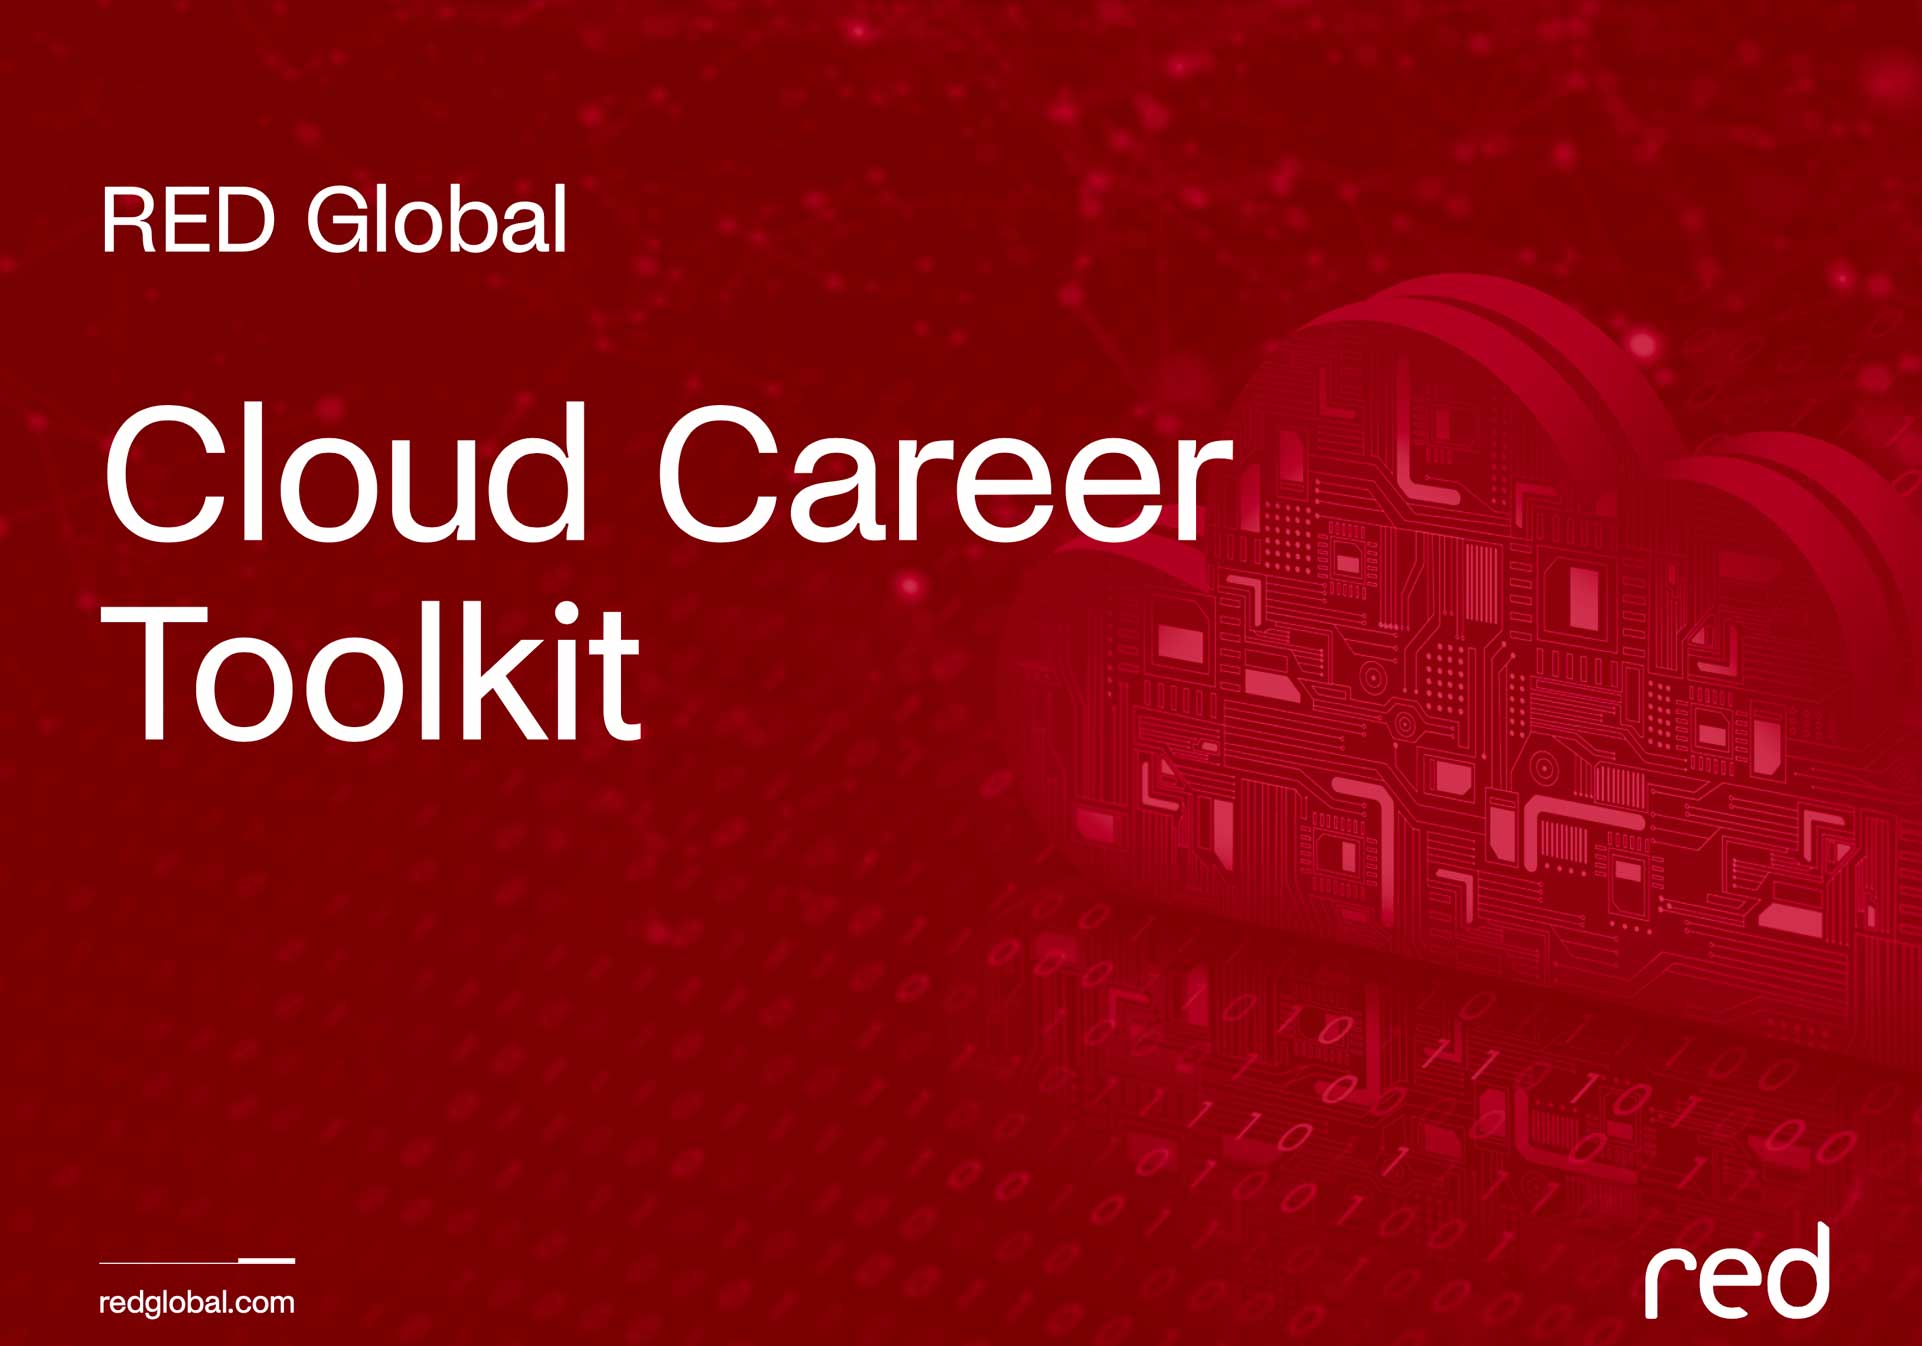 Your Cloud Career Toolkit